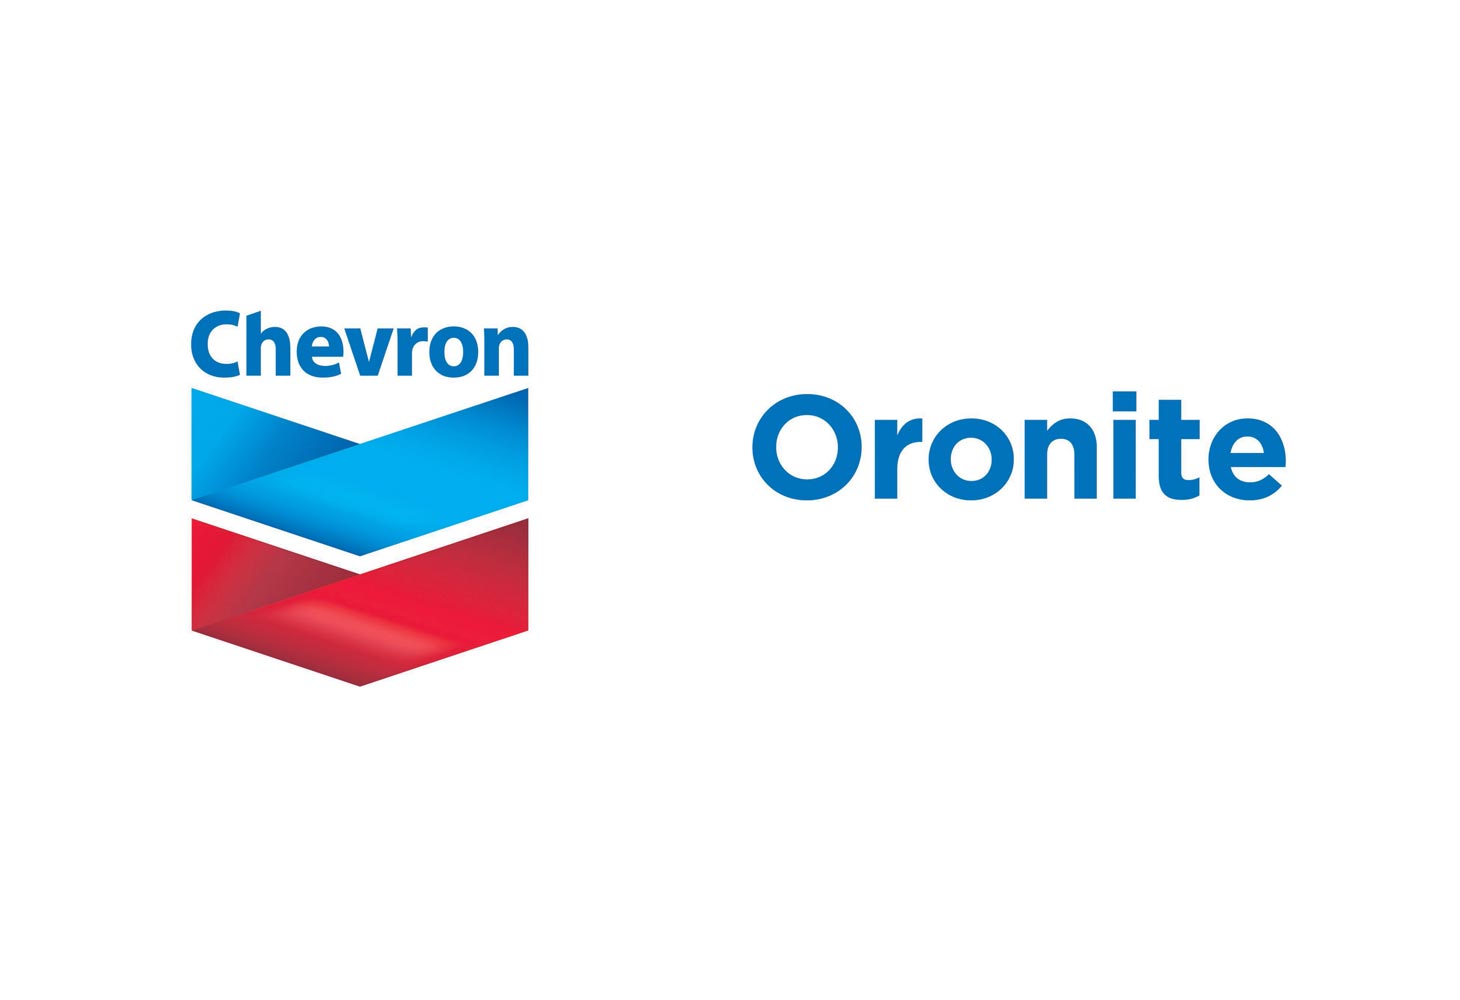 Chevron Oronite sponsors UNITI Mineral Oil Technology Congress